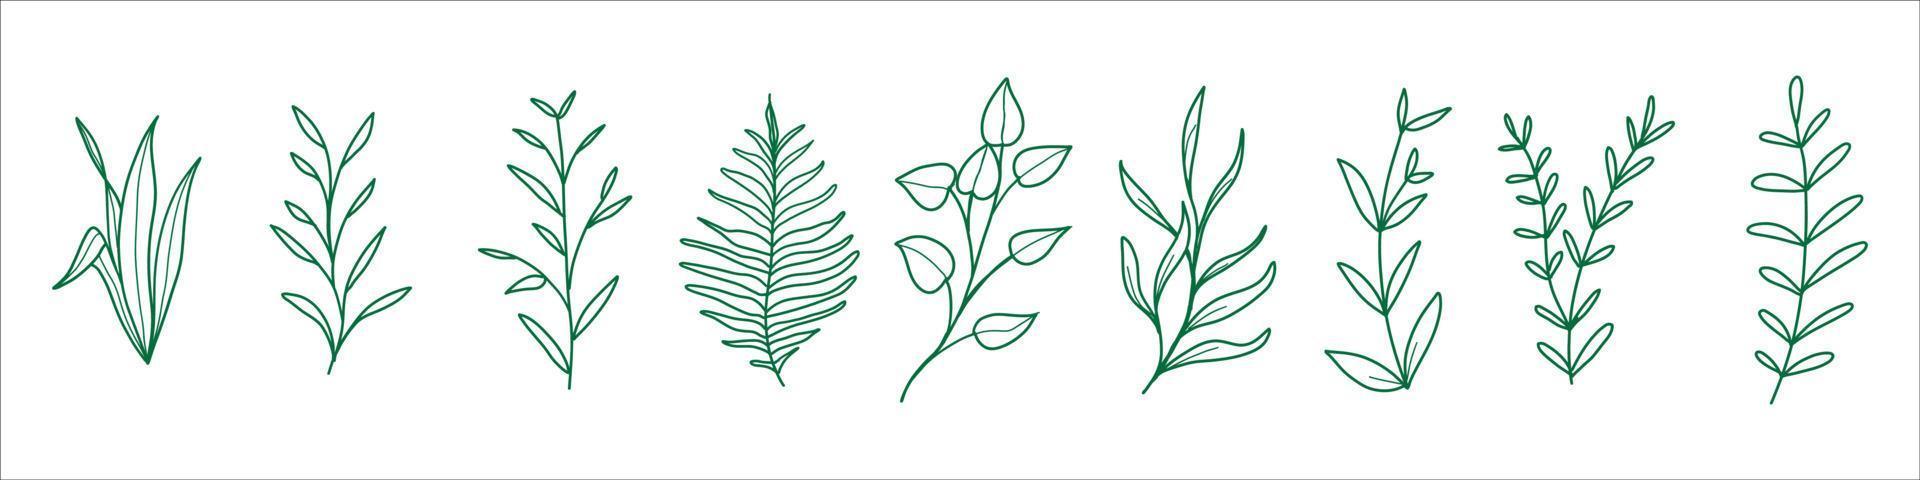 vektor botaniska doodles illustration element